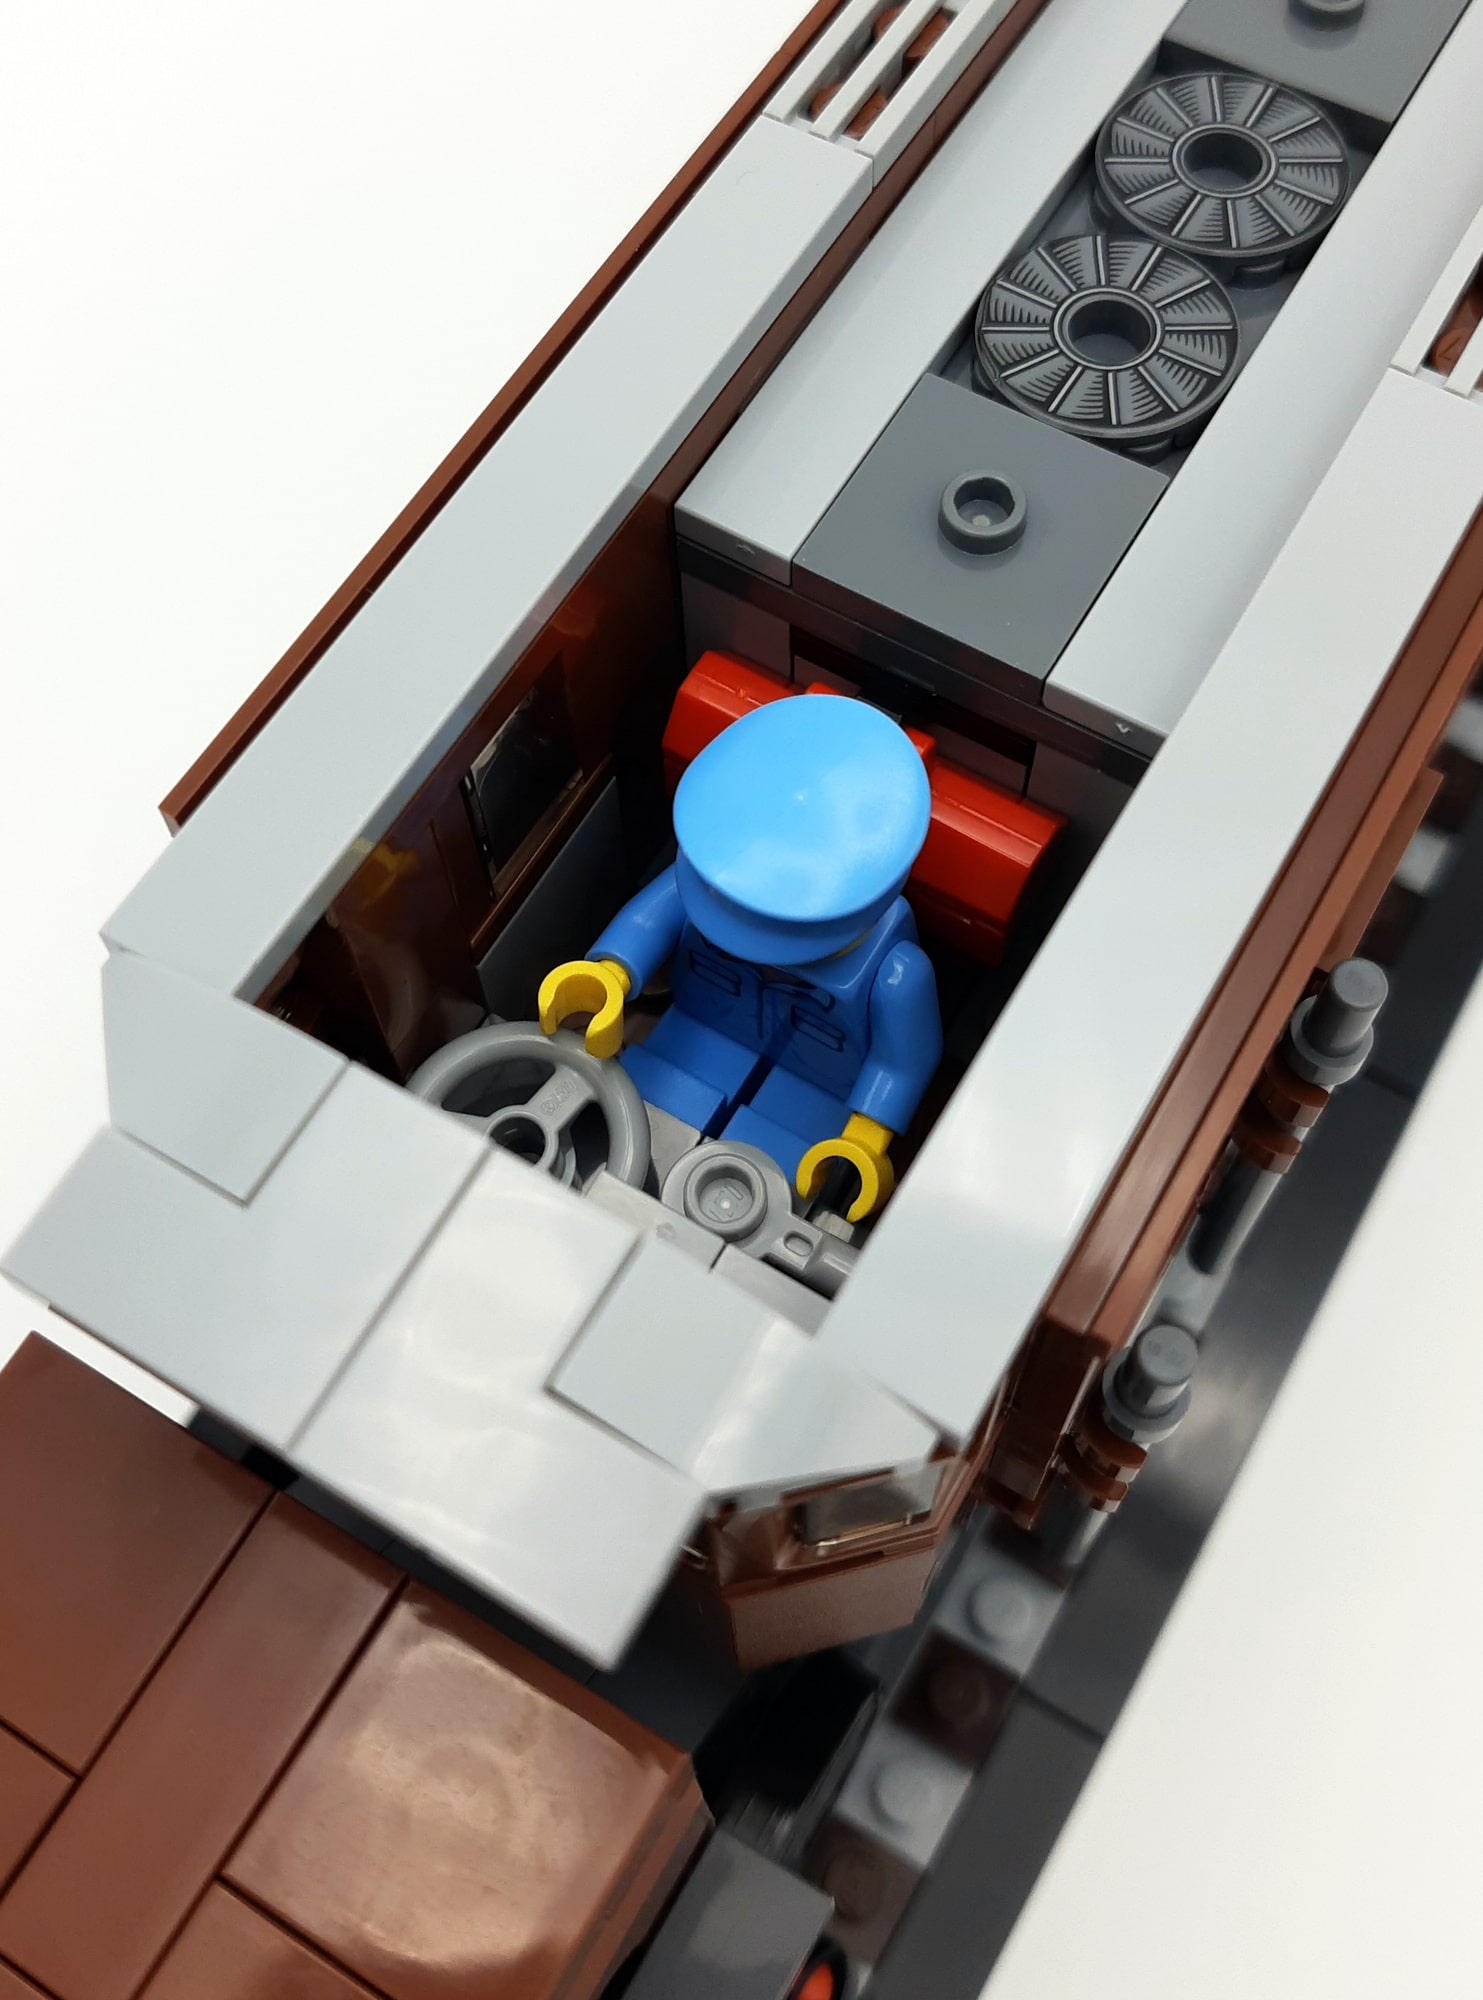 LEGO 10277 Krokodil Lokomotive - Enge im Führerstand